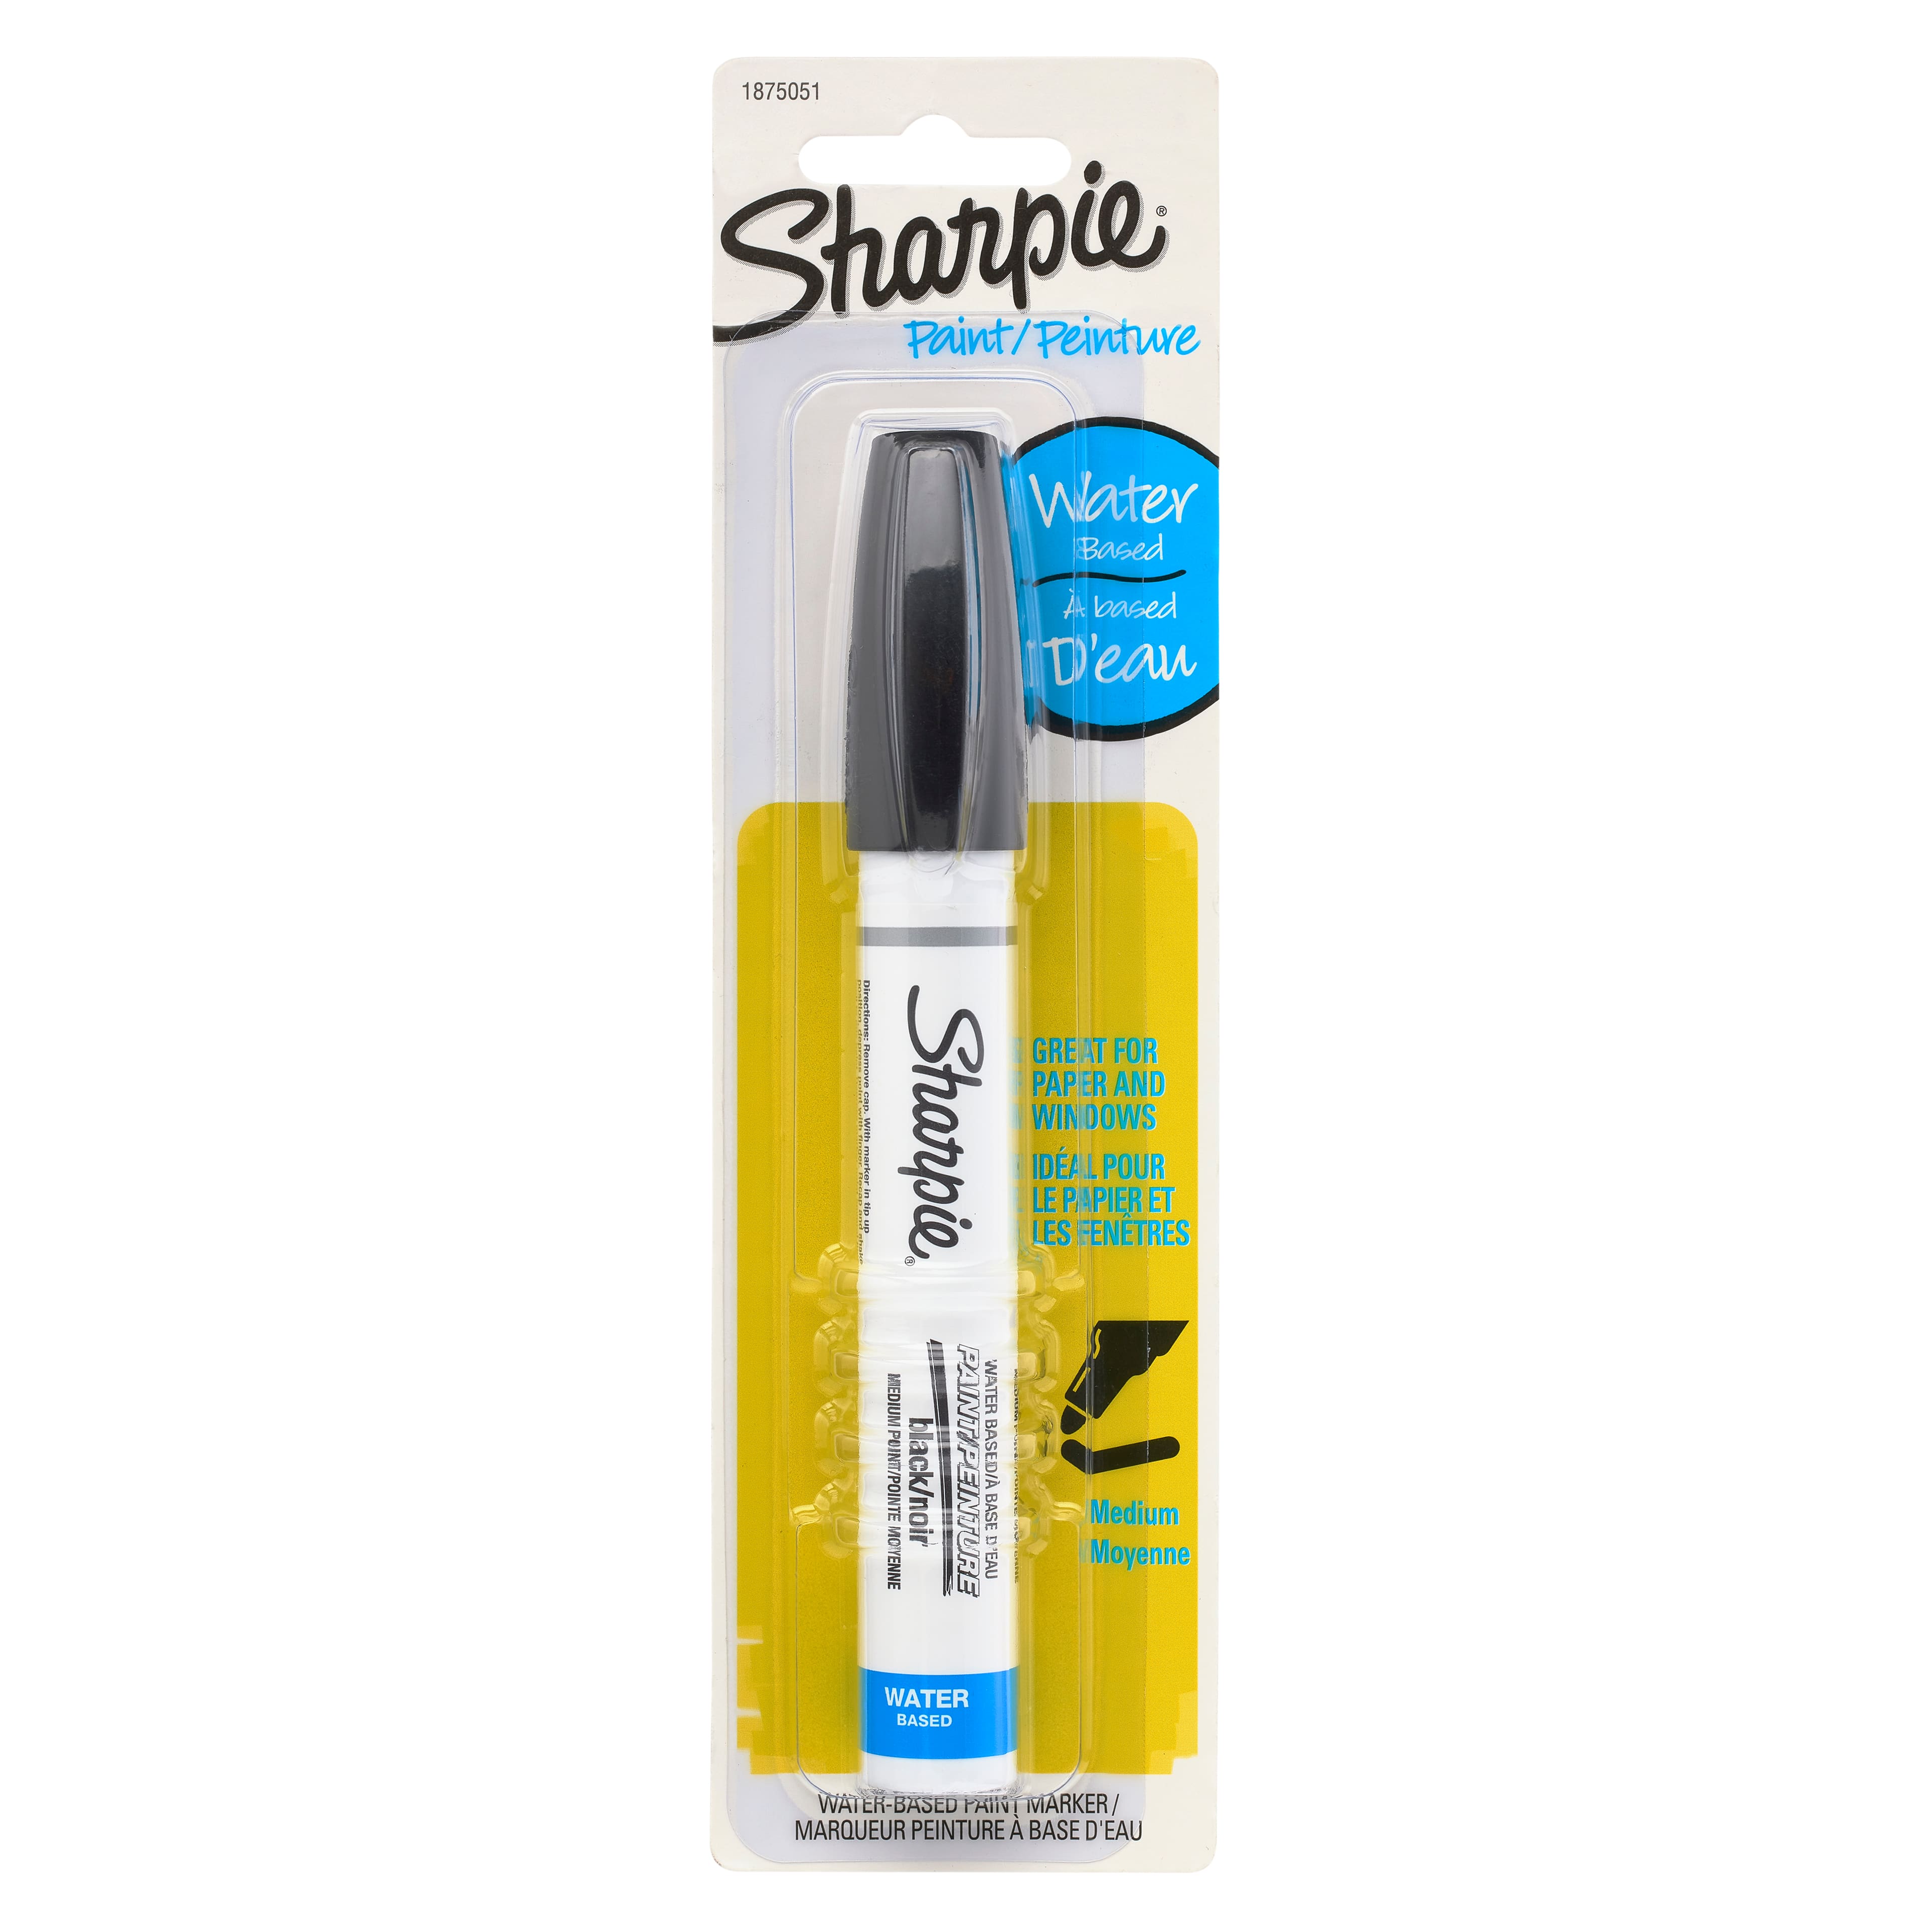 Sharpie Water-Based Paint Marker, Medium Tip, White (37206